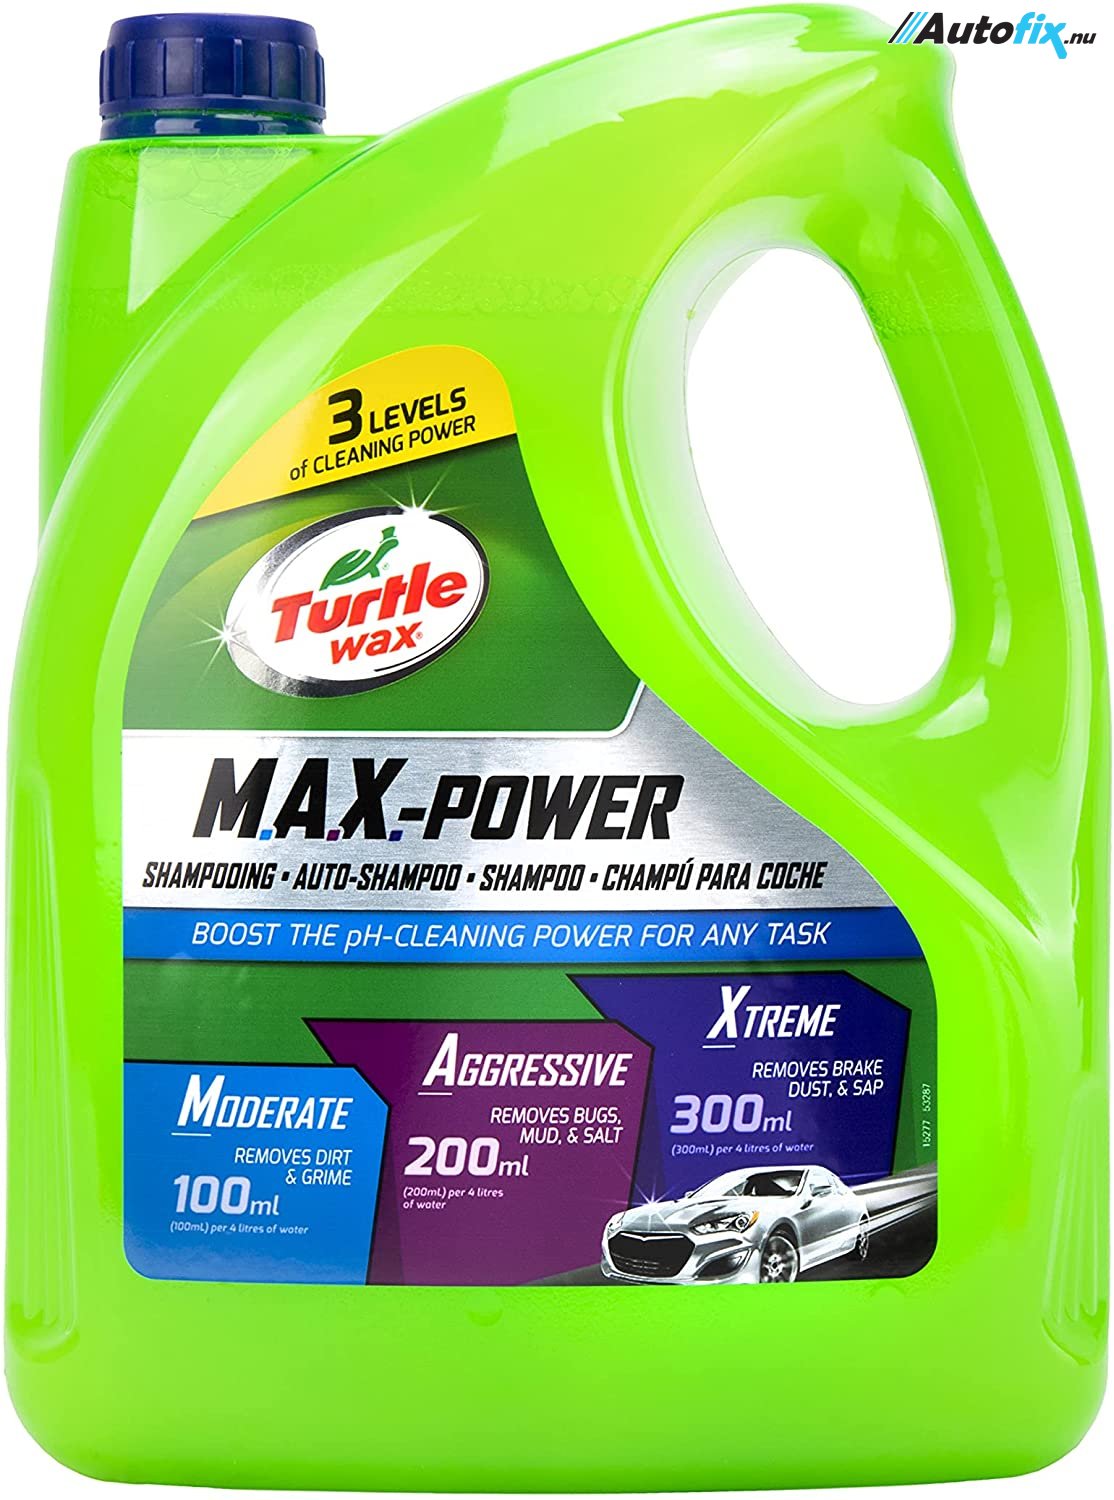 Autoshampoo Turtle MAX-Power 4L - TIL AFHENTNING PÅ LAGER) Autoshampoo - Autofix.nu